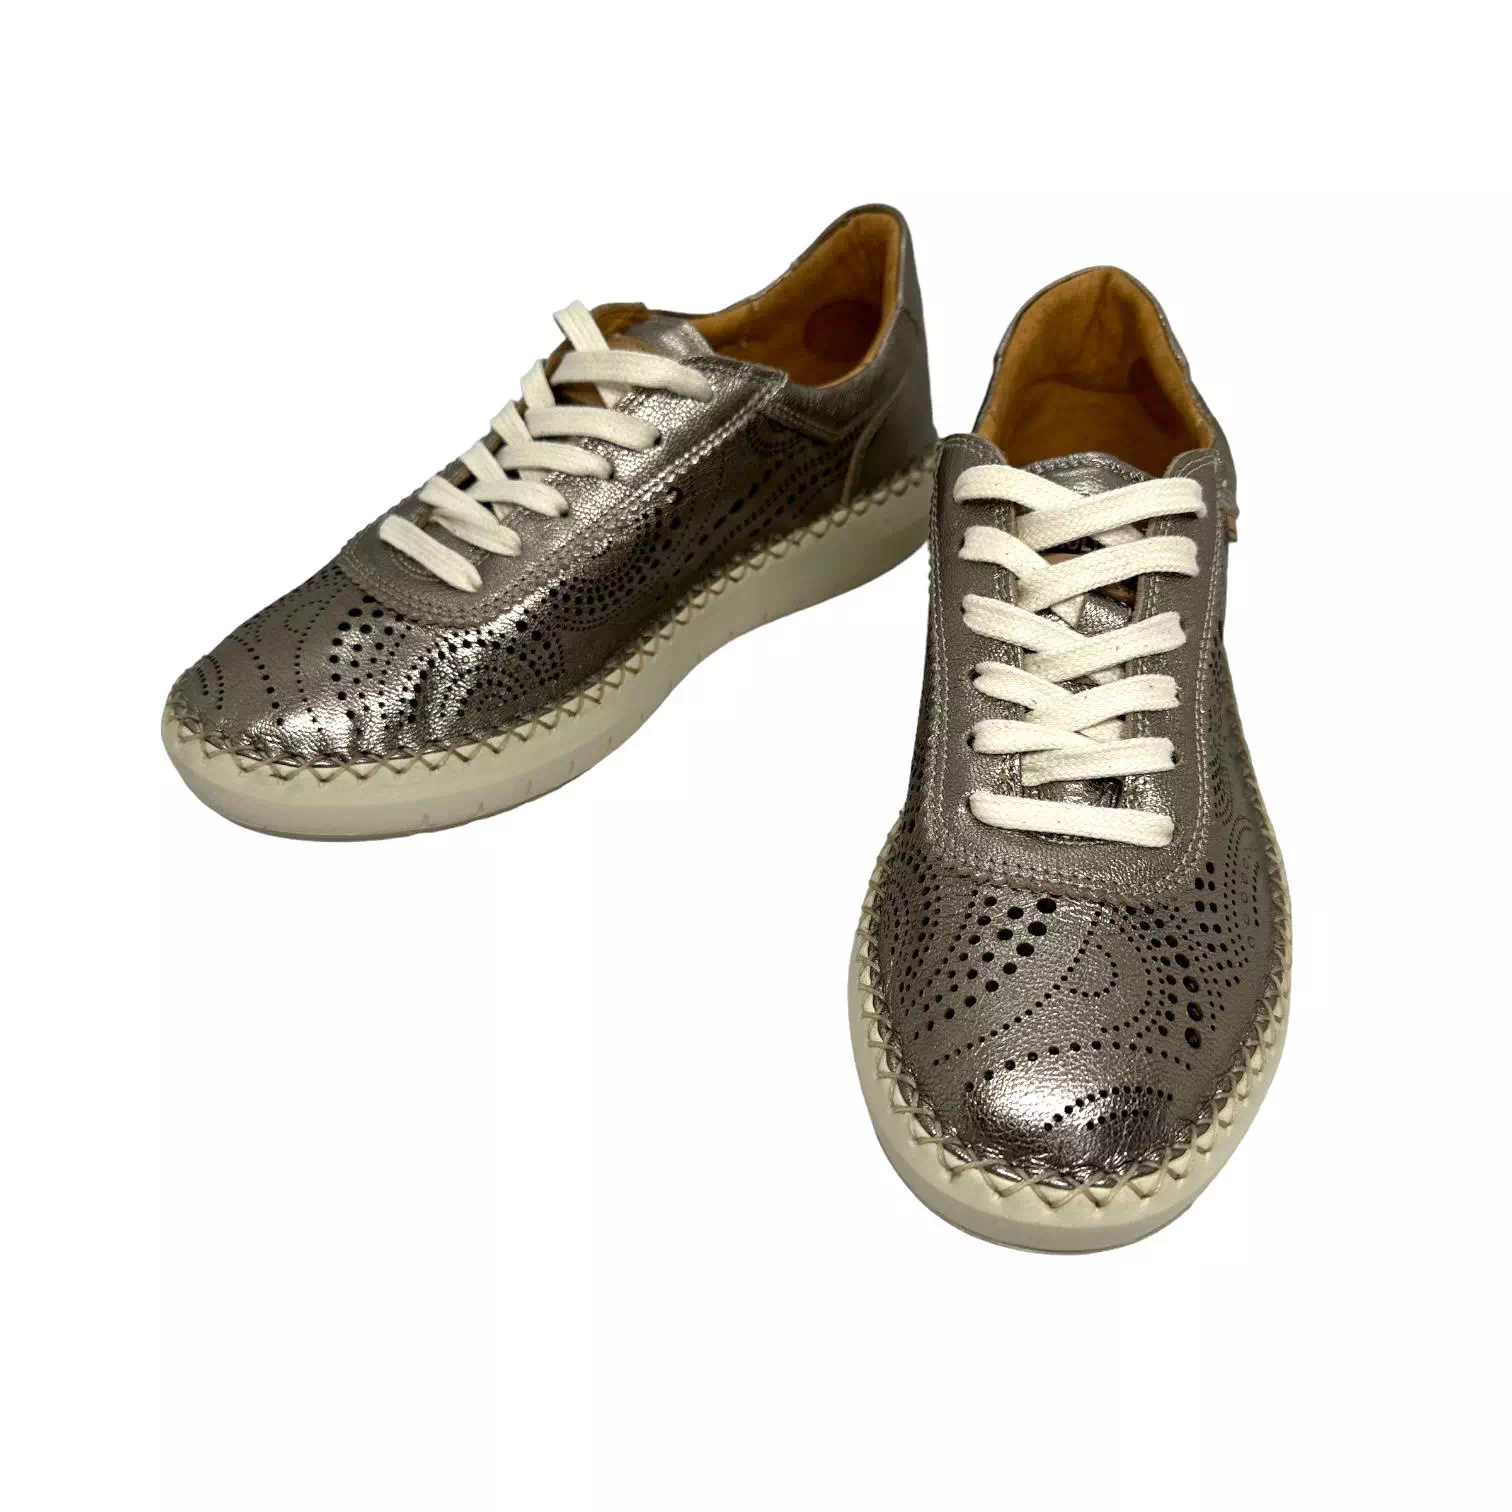 Pantofi Pikolinos bronz cu siret si perforatii